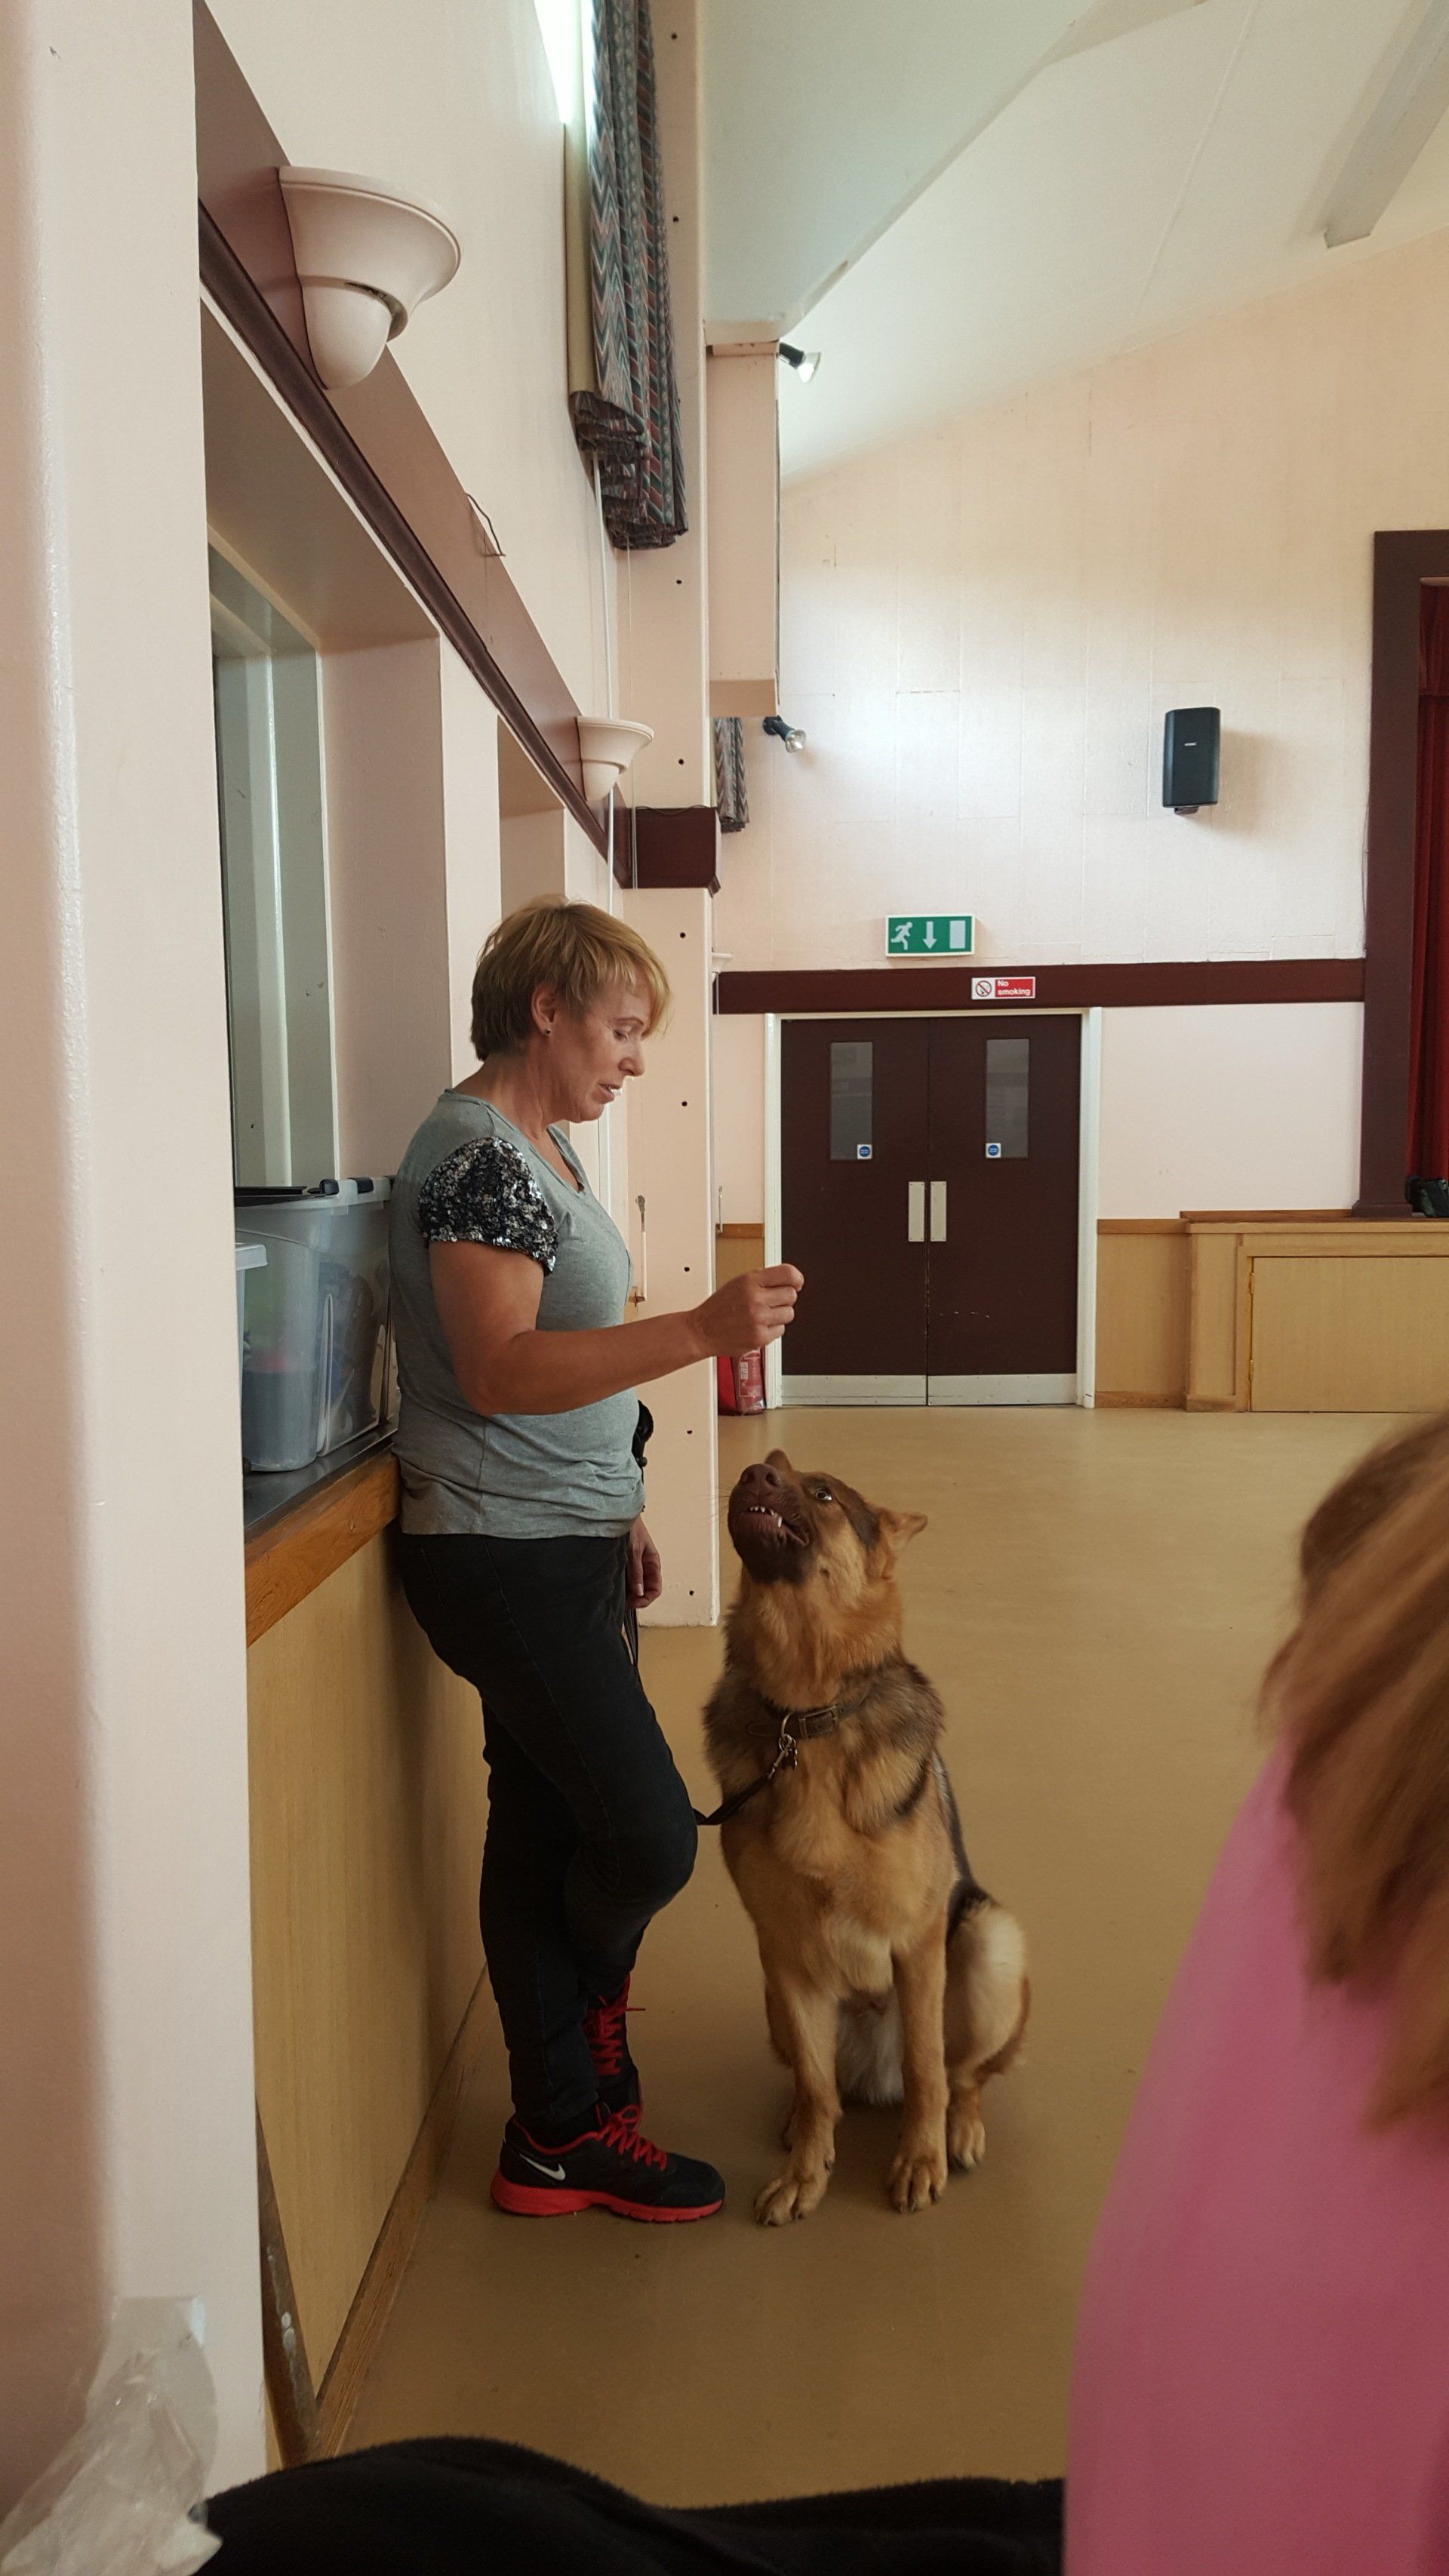 Dog training classes in progress